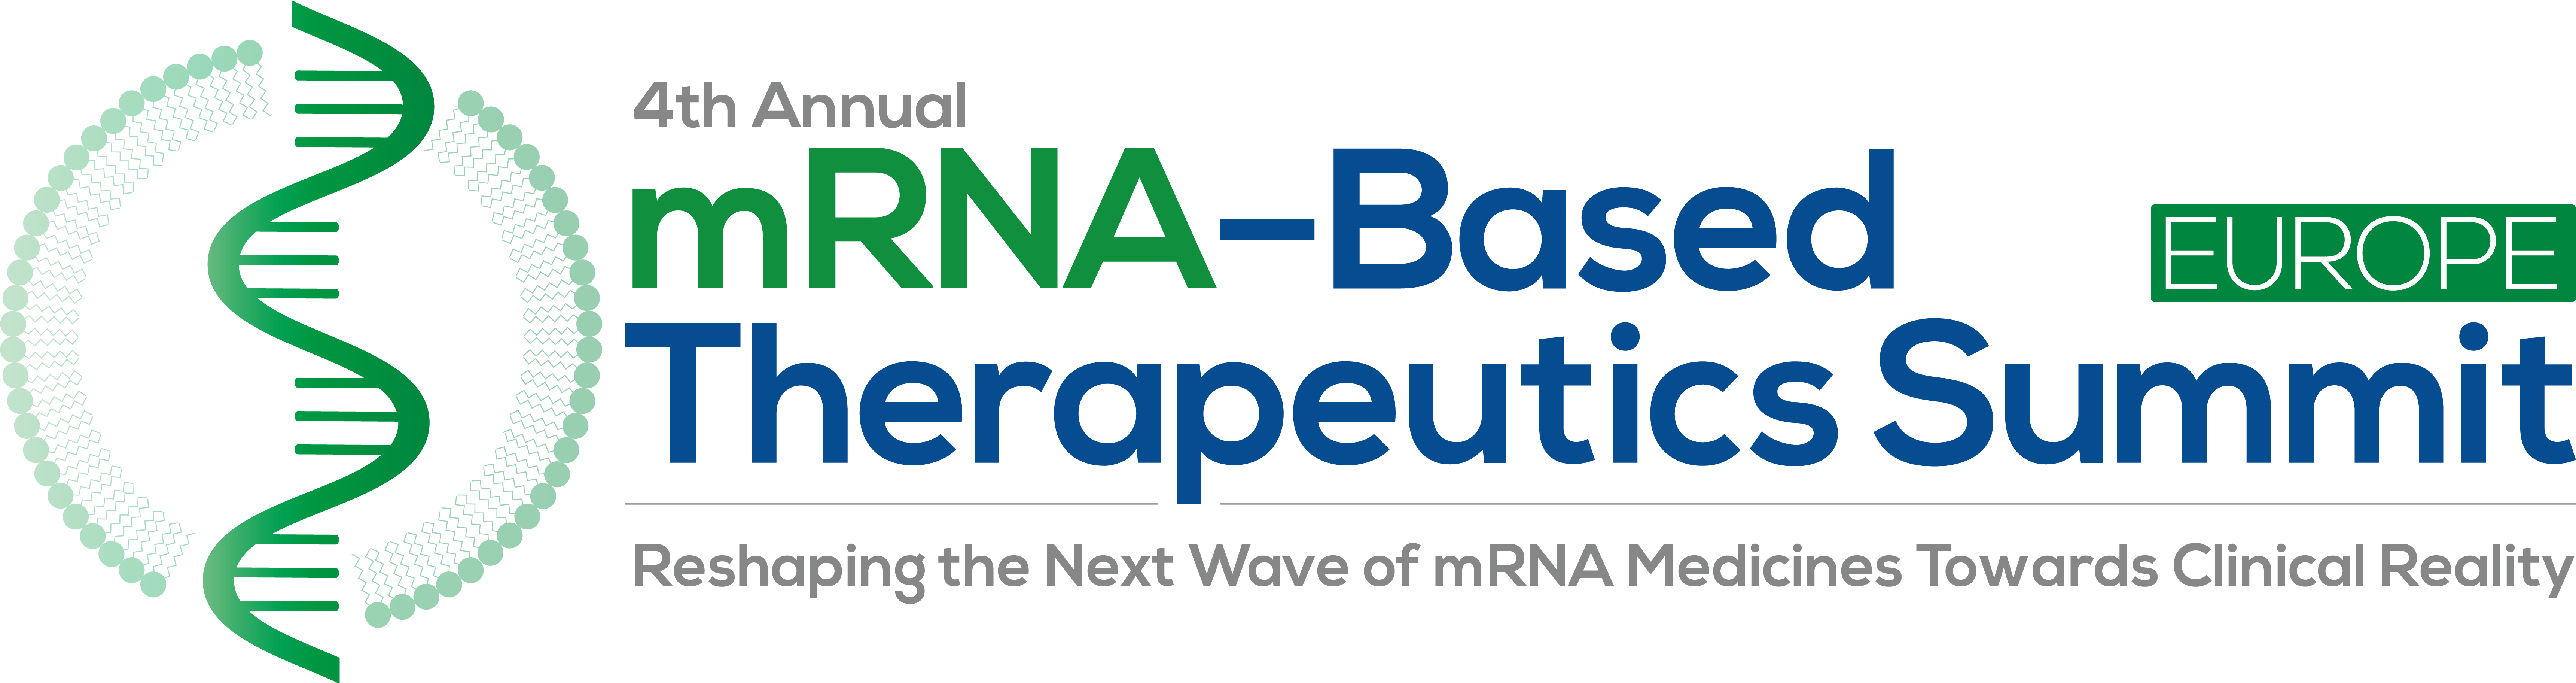 HW240130 4th Annual mRNA-Based Therapeutics Summit logo